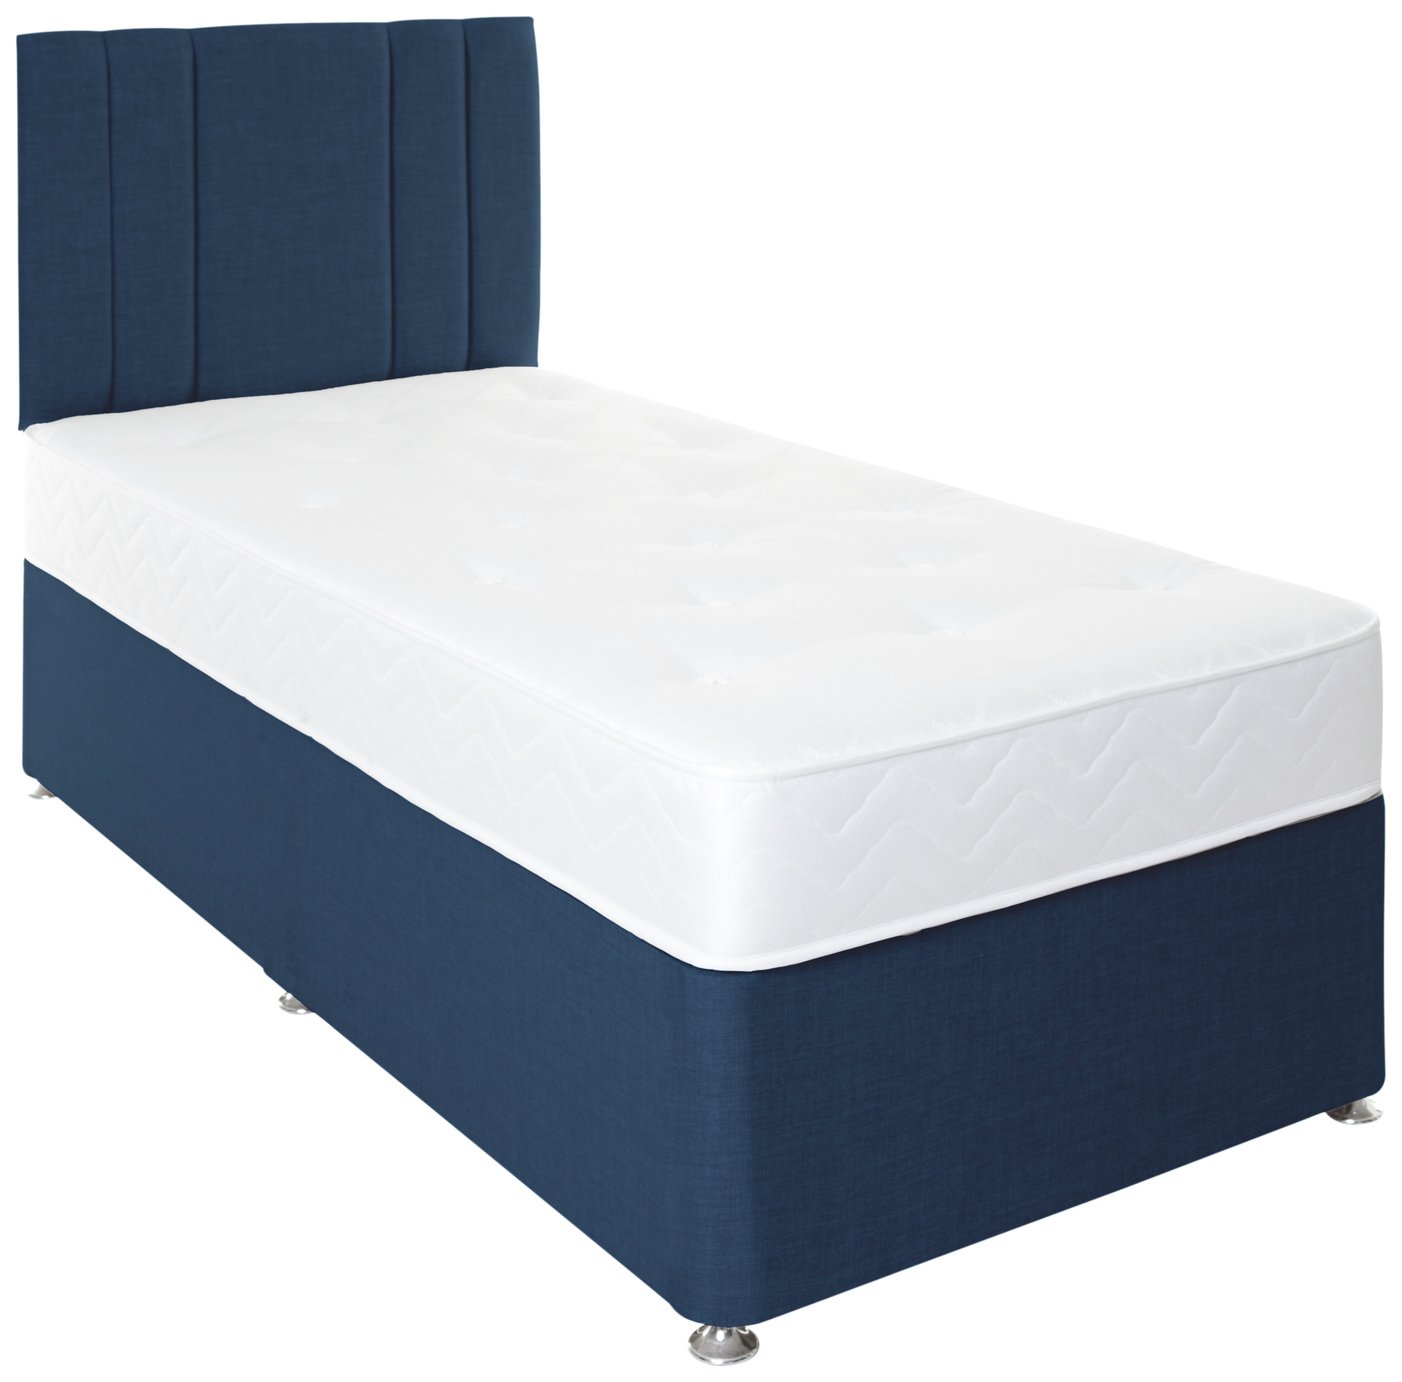 Airpsrung Henlow 1200 Pocket Divan Bed & Headboard - Blue at Argos